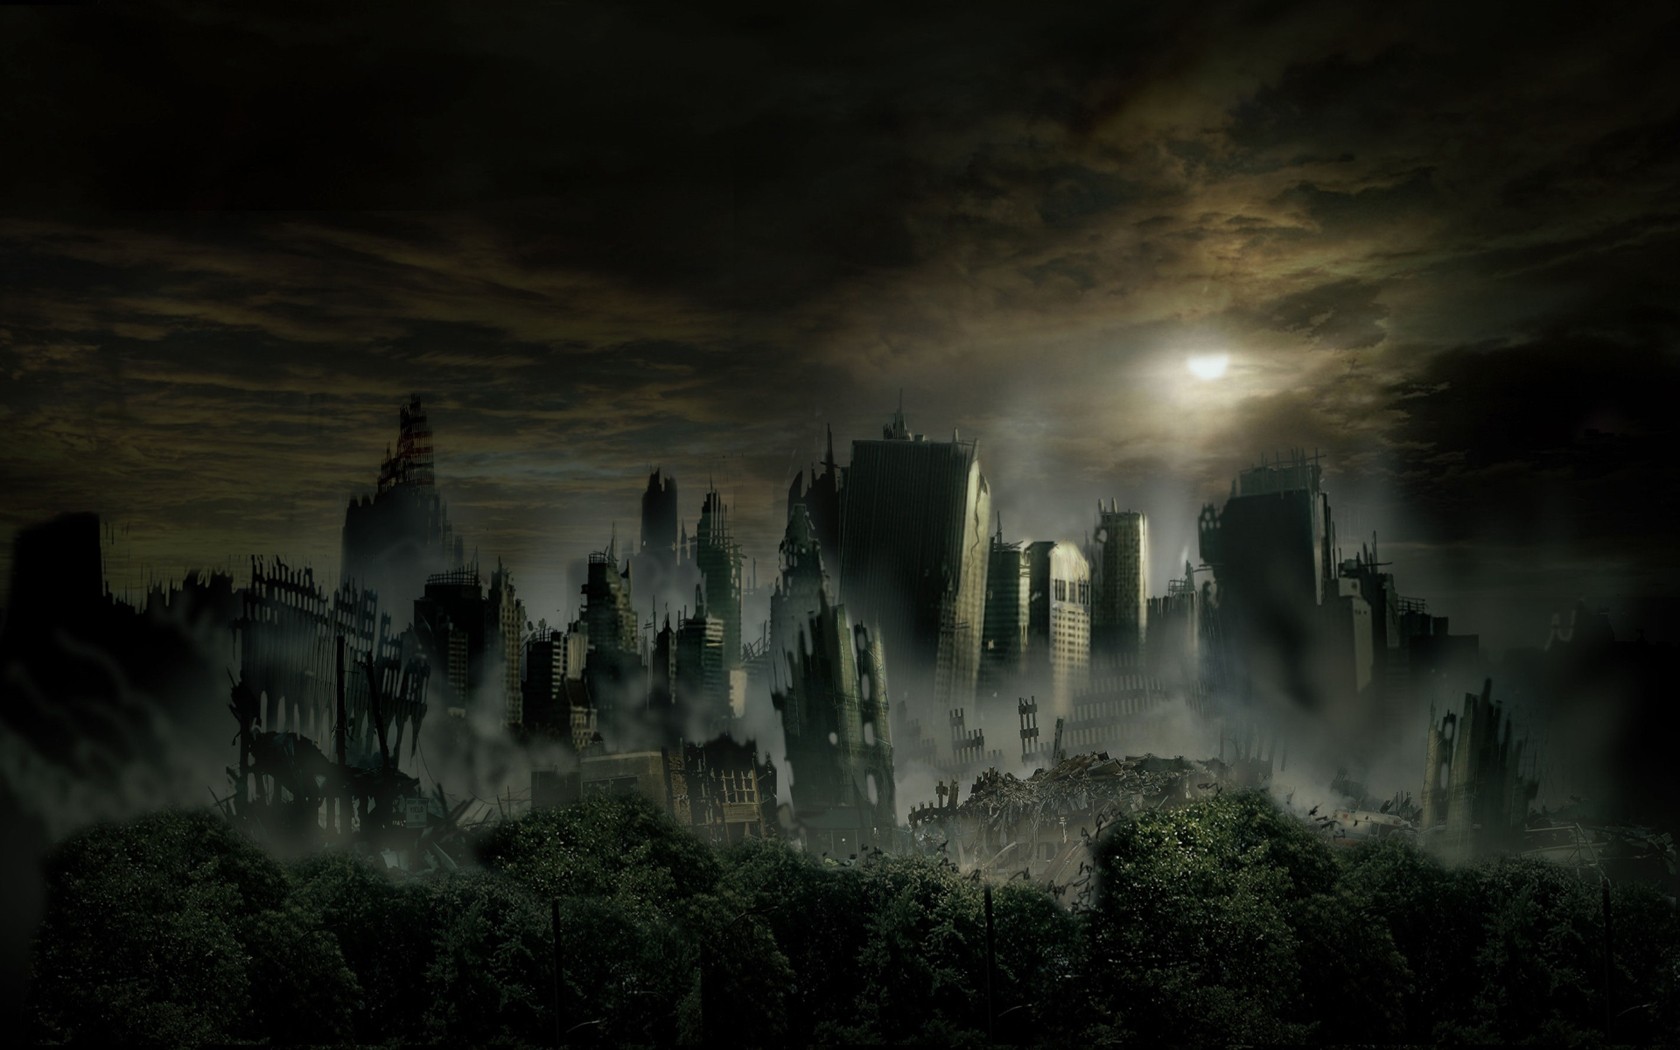 General 1680x1050 urban decay apocalyptic overgrown overcast digital art futuristic ruins cityscape